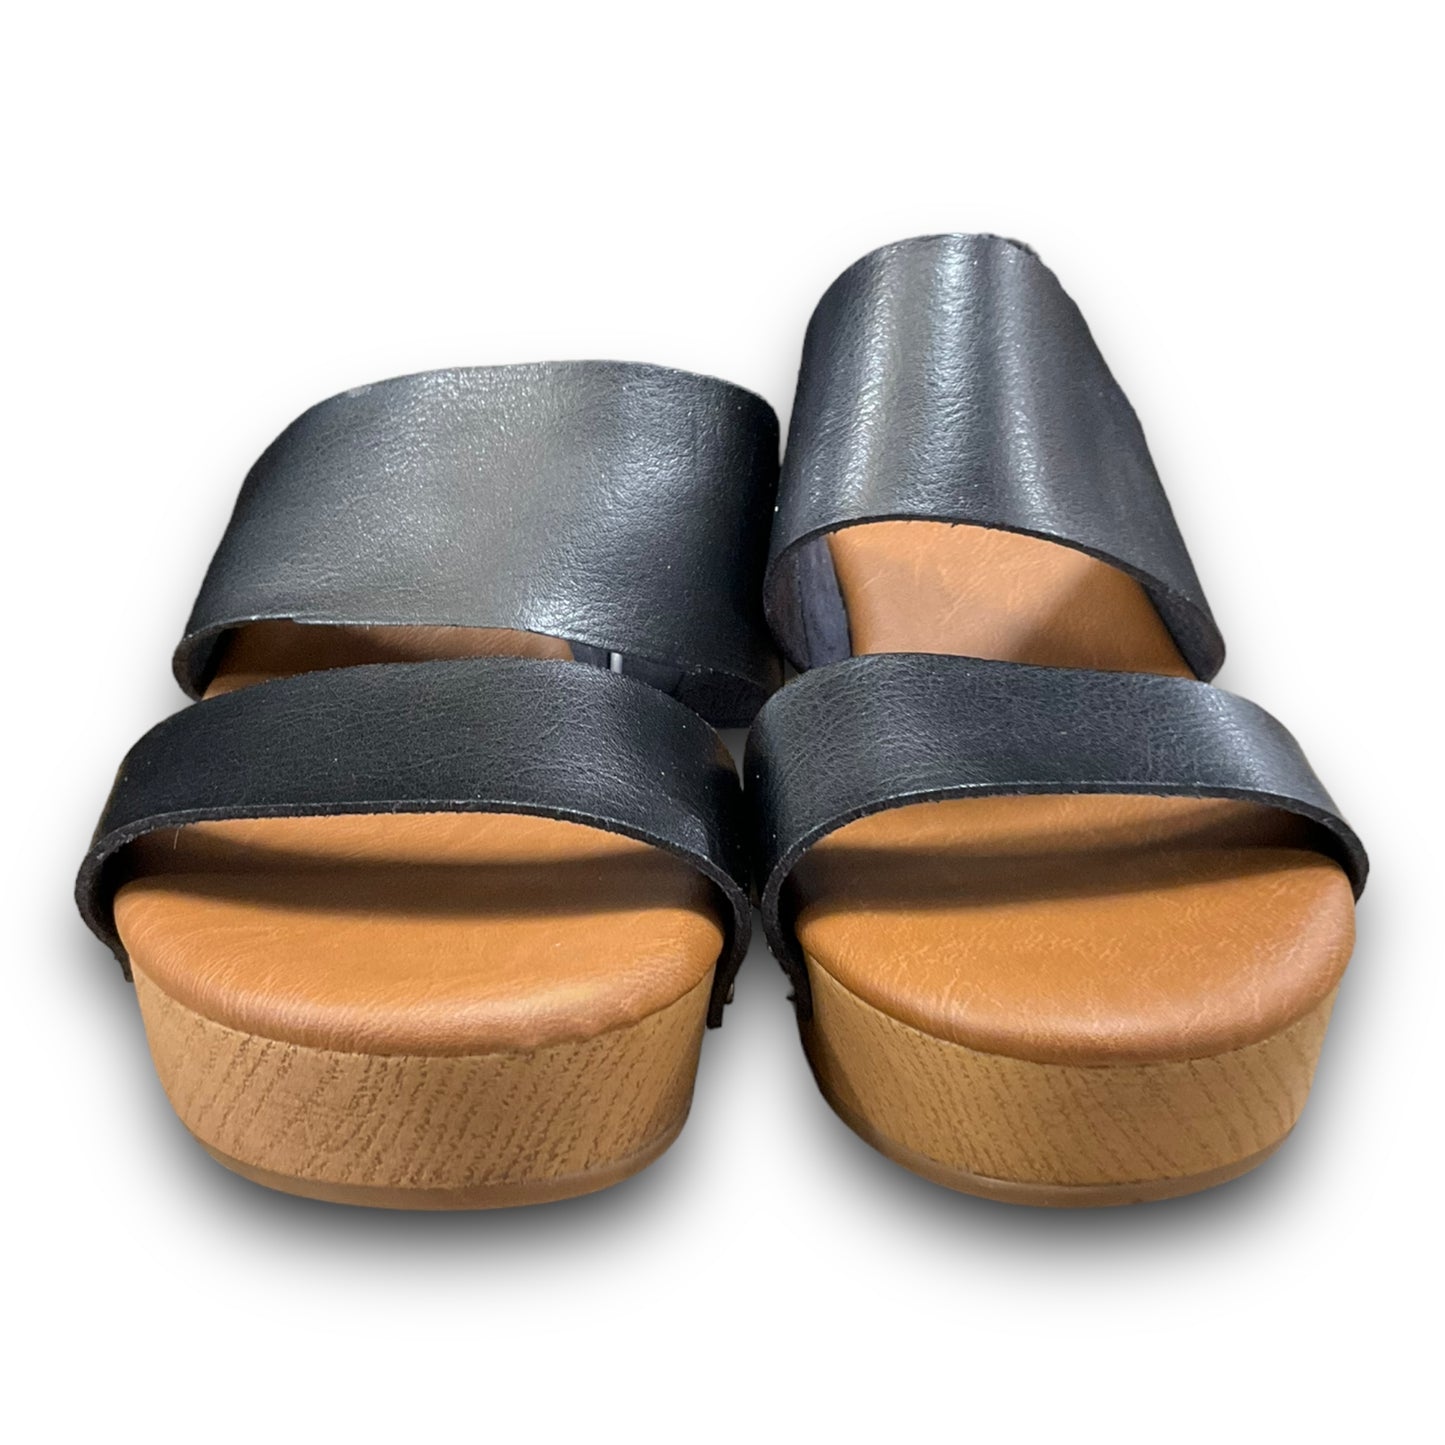 Sandals Heels Block By Universal Thread  Size: 8